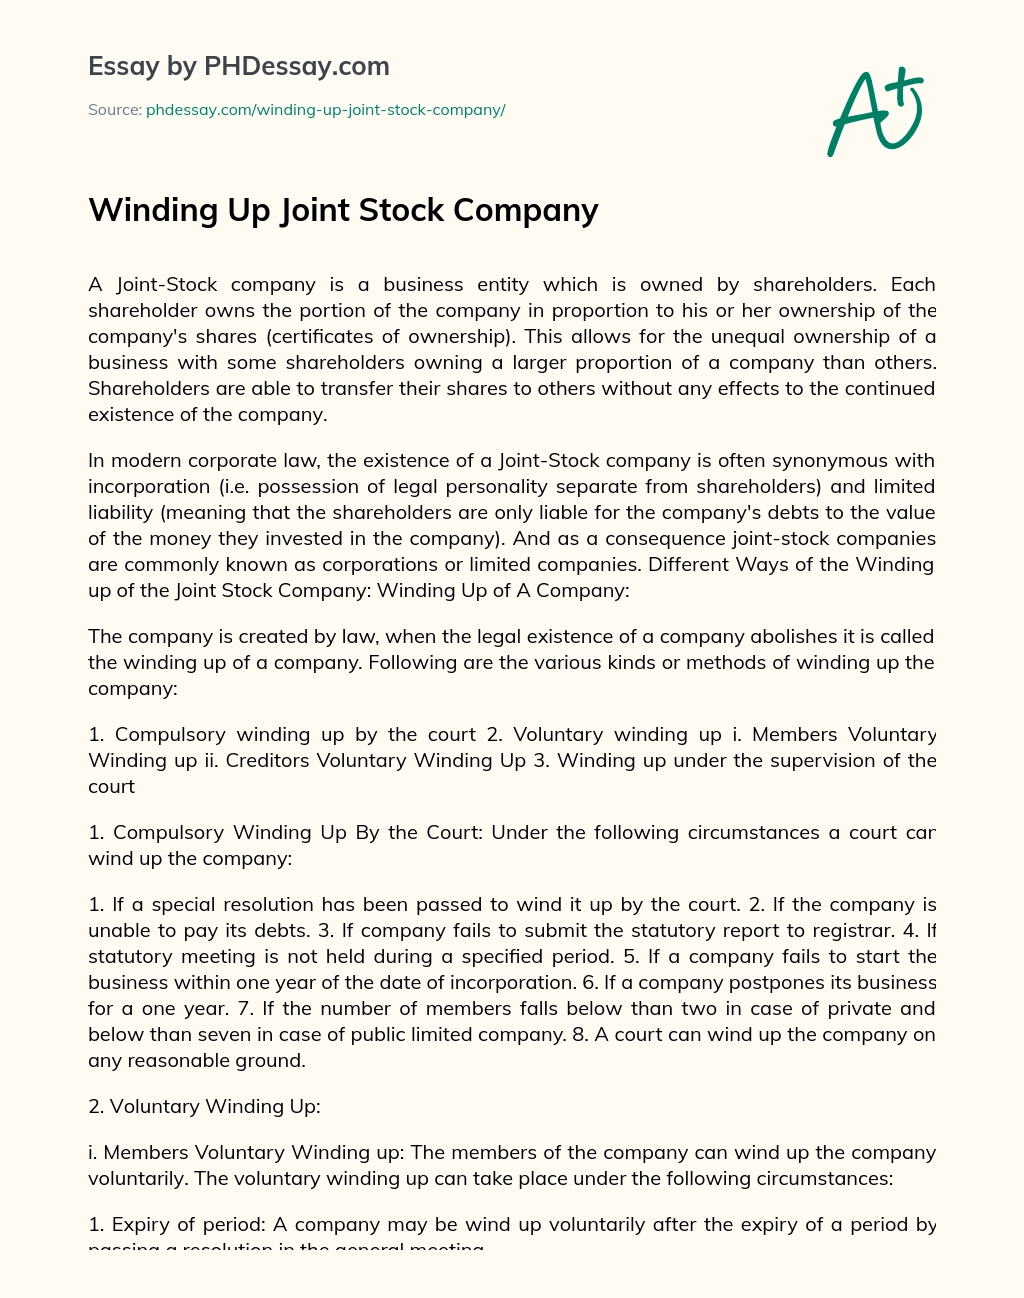 Winding Up Joint Stock Company essay